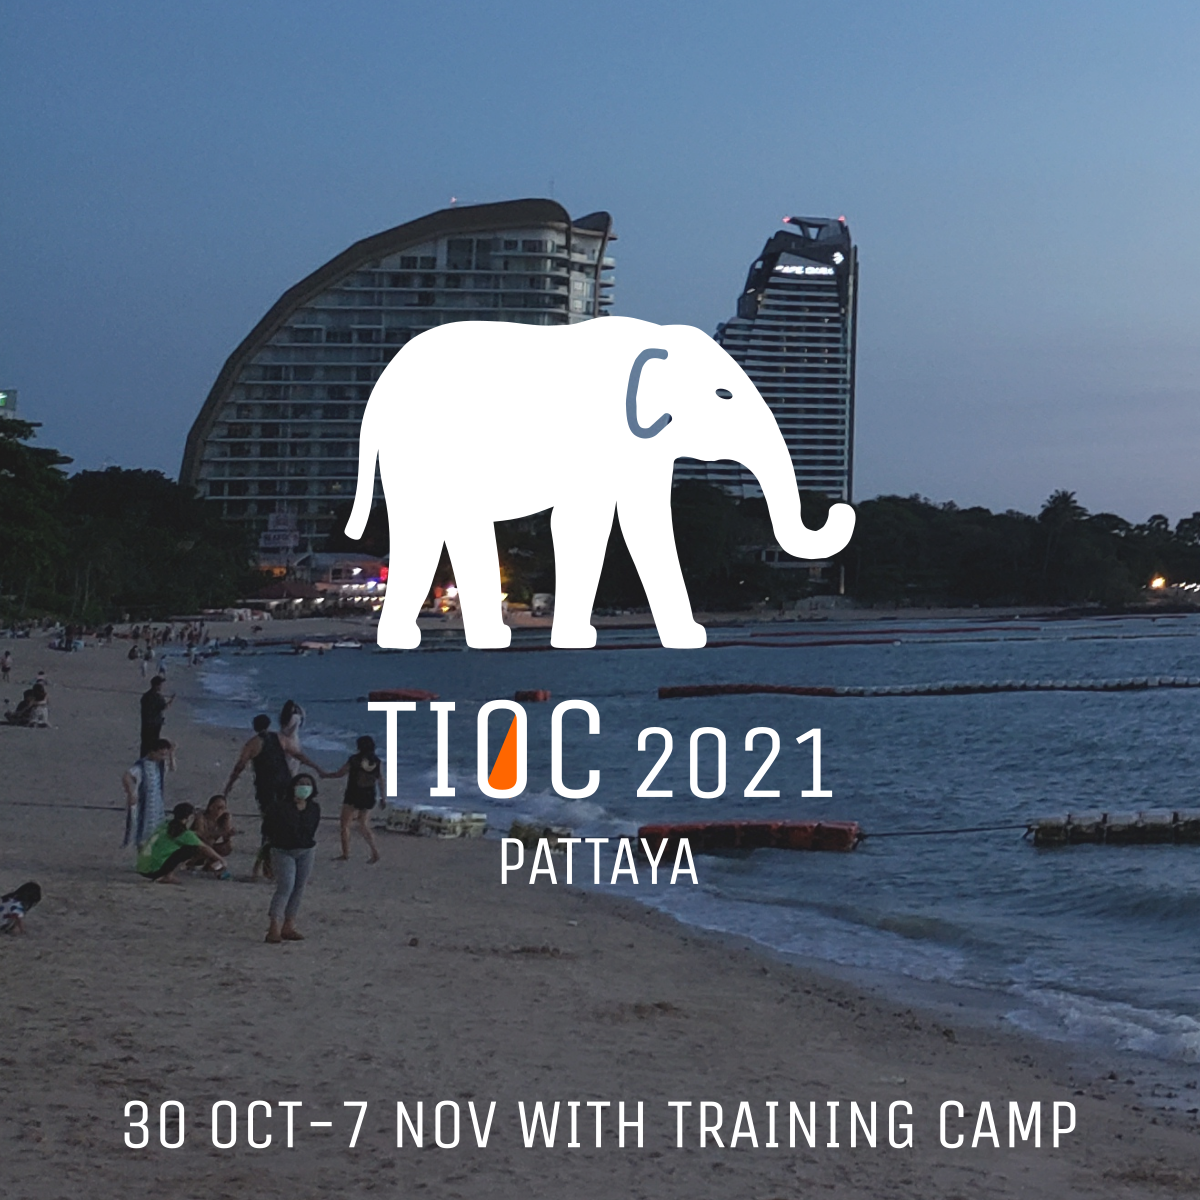 Thailand International Orienteering Championship 2021, Pattaya, 30 October to 7 November with training camp. Part of #AsiaCityRace and Landrunning World Series 2021.